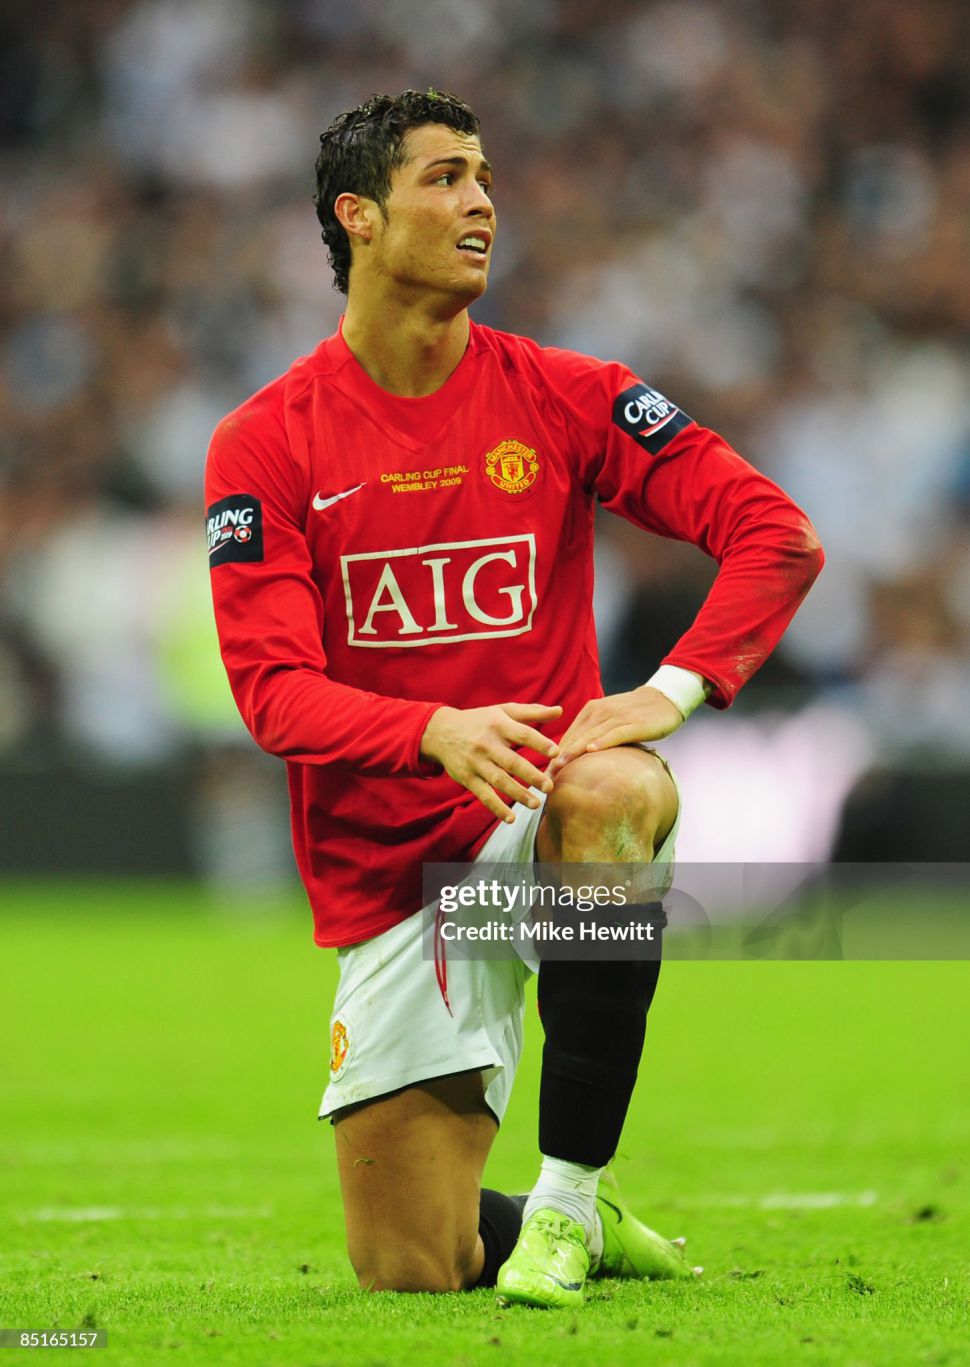 Áo Ronaldo Manchester United League Cup 2009 home shirt jersey 237925